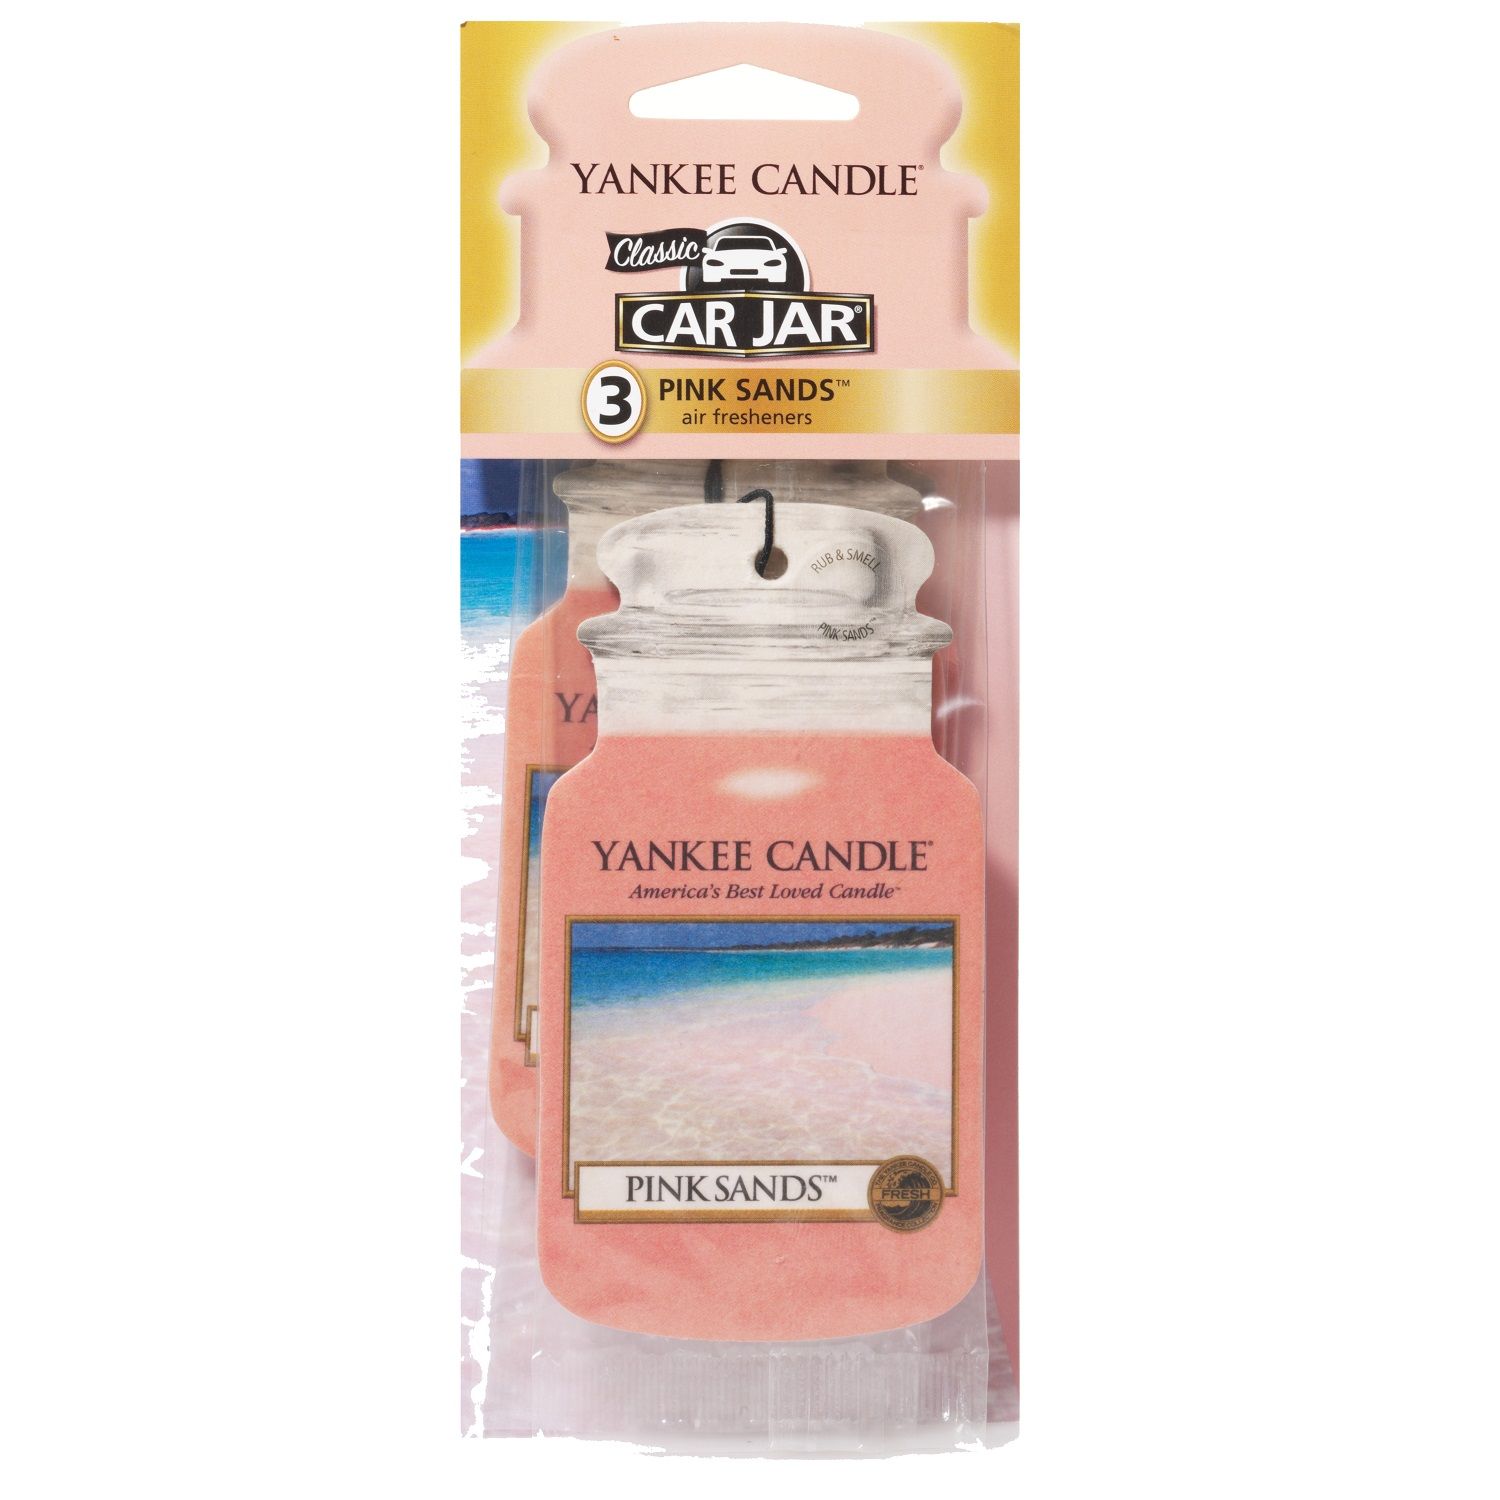 Yankee Candle Pink Sands Single Car Jar Air Freshener